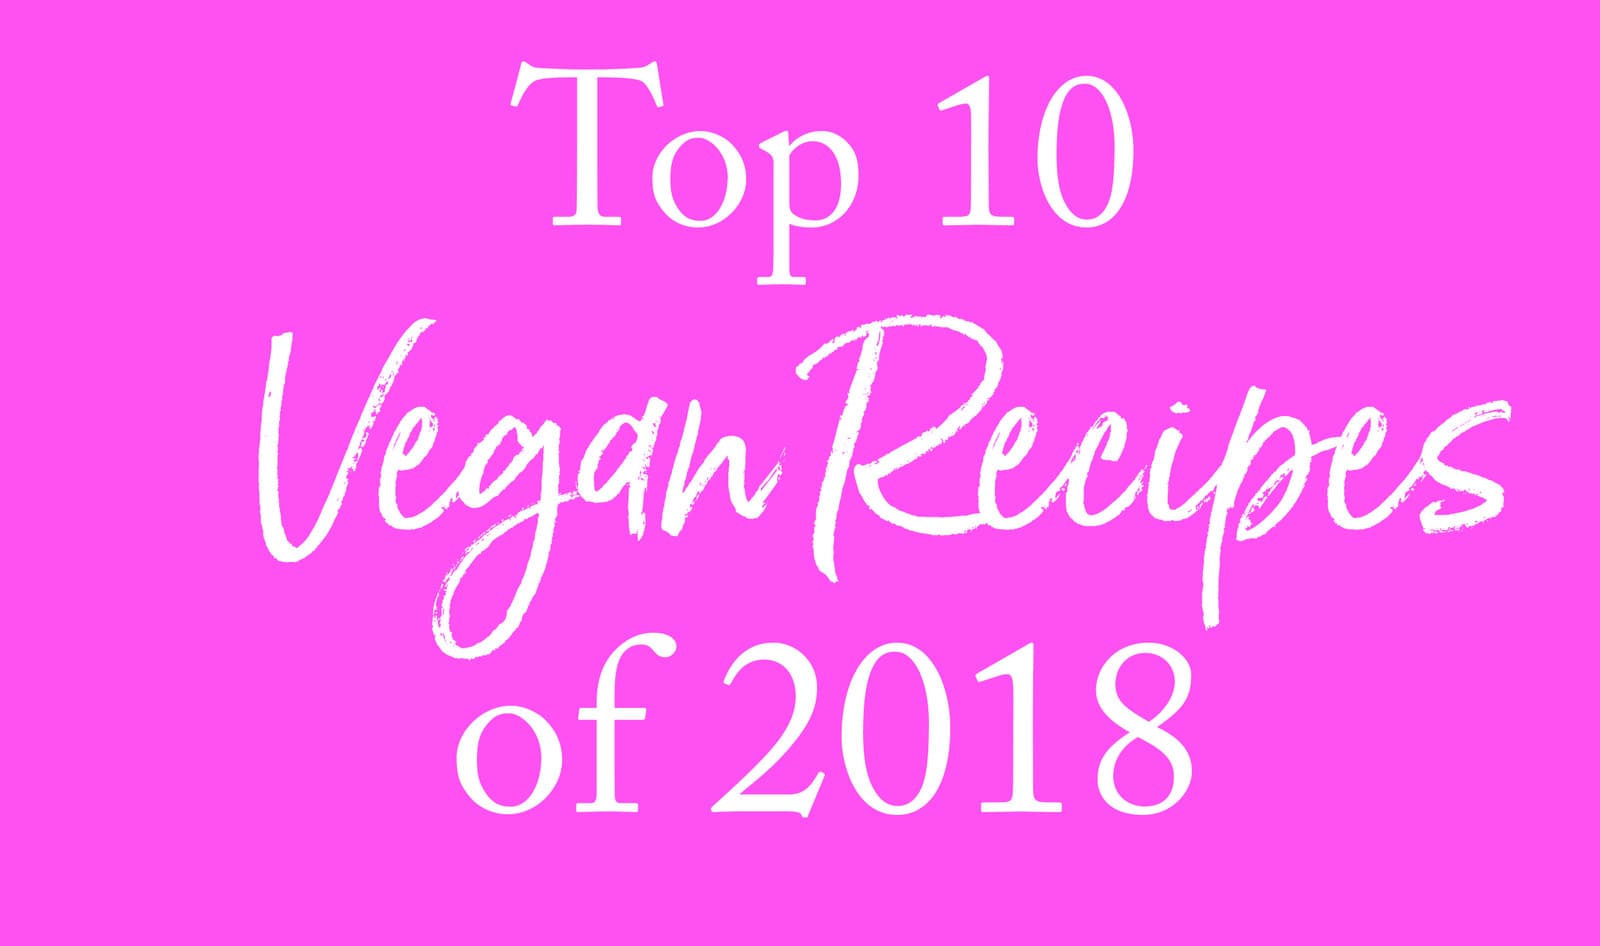 Top 10 Vegan Recipes of 2018